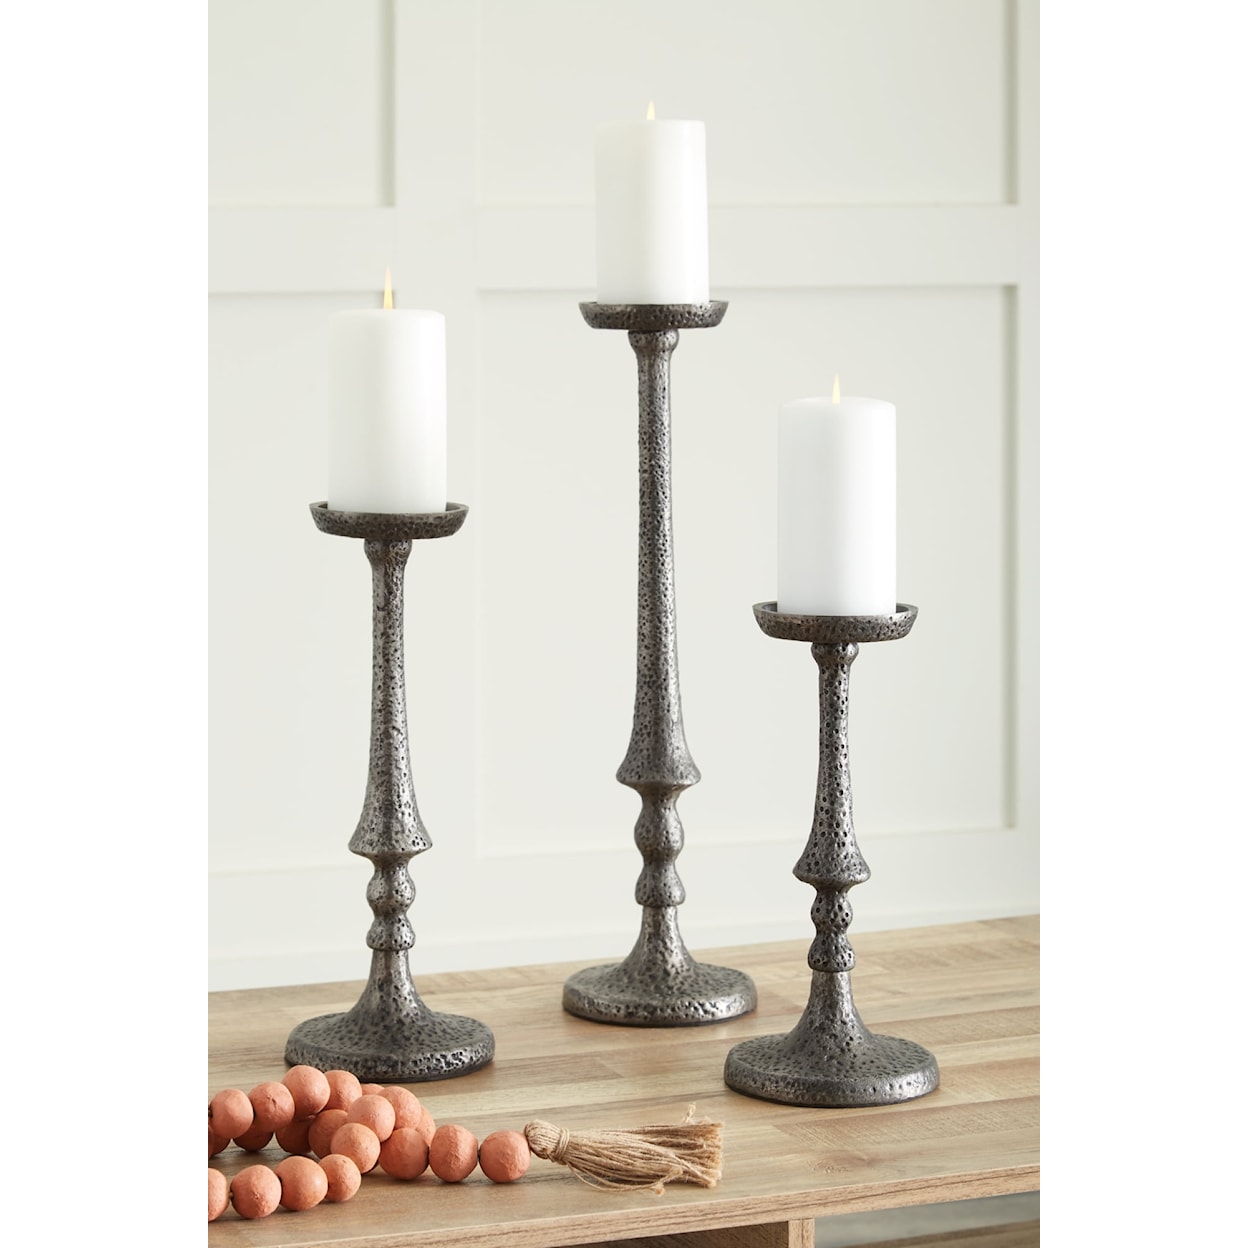 Ashley Furniture Signature Design Eravell Candle Holder Set (Set of 3)